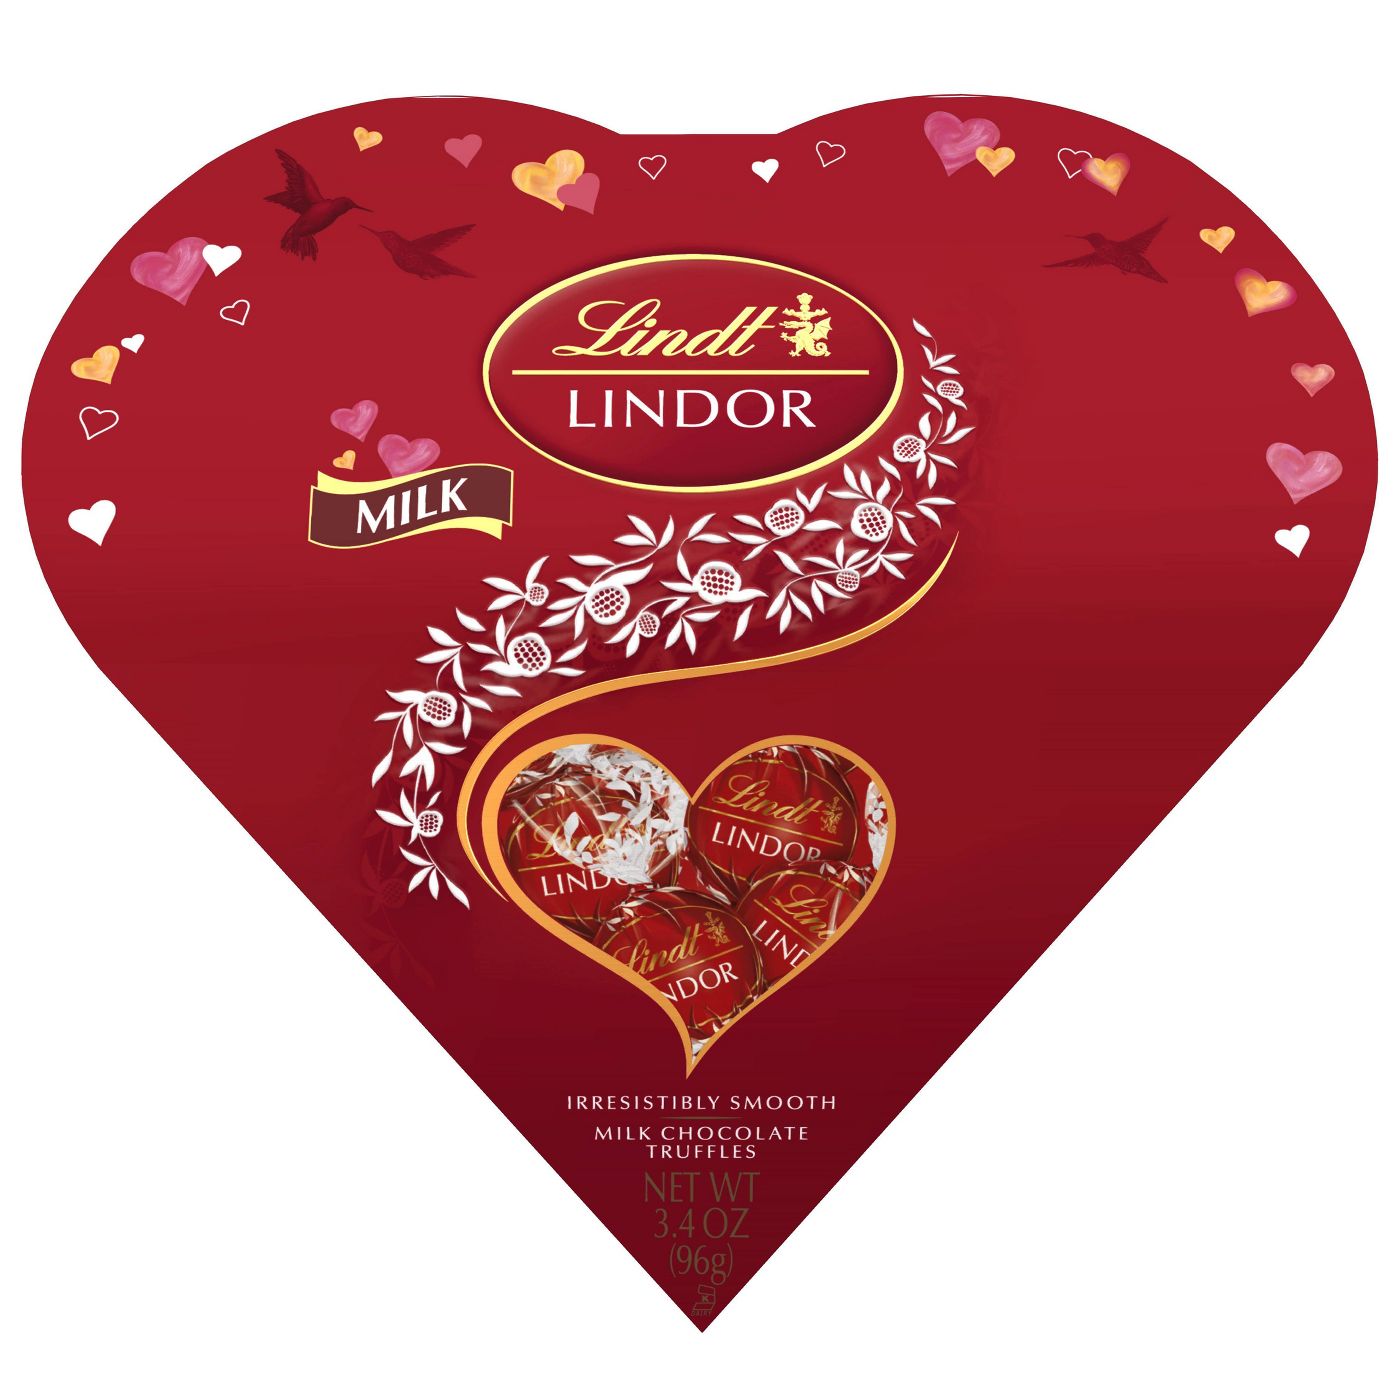 Lindt Lindor Valentine's Day Friendship Heart Milk Chocolate Truffles, 3.4oz